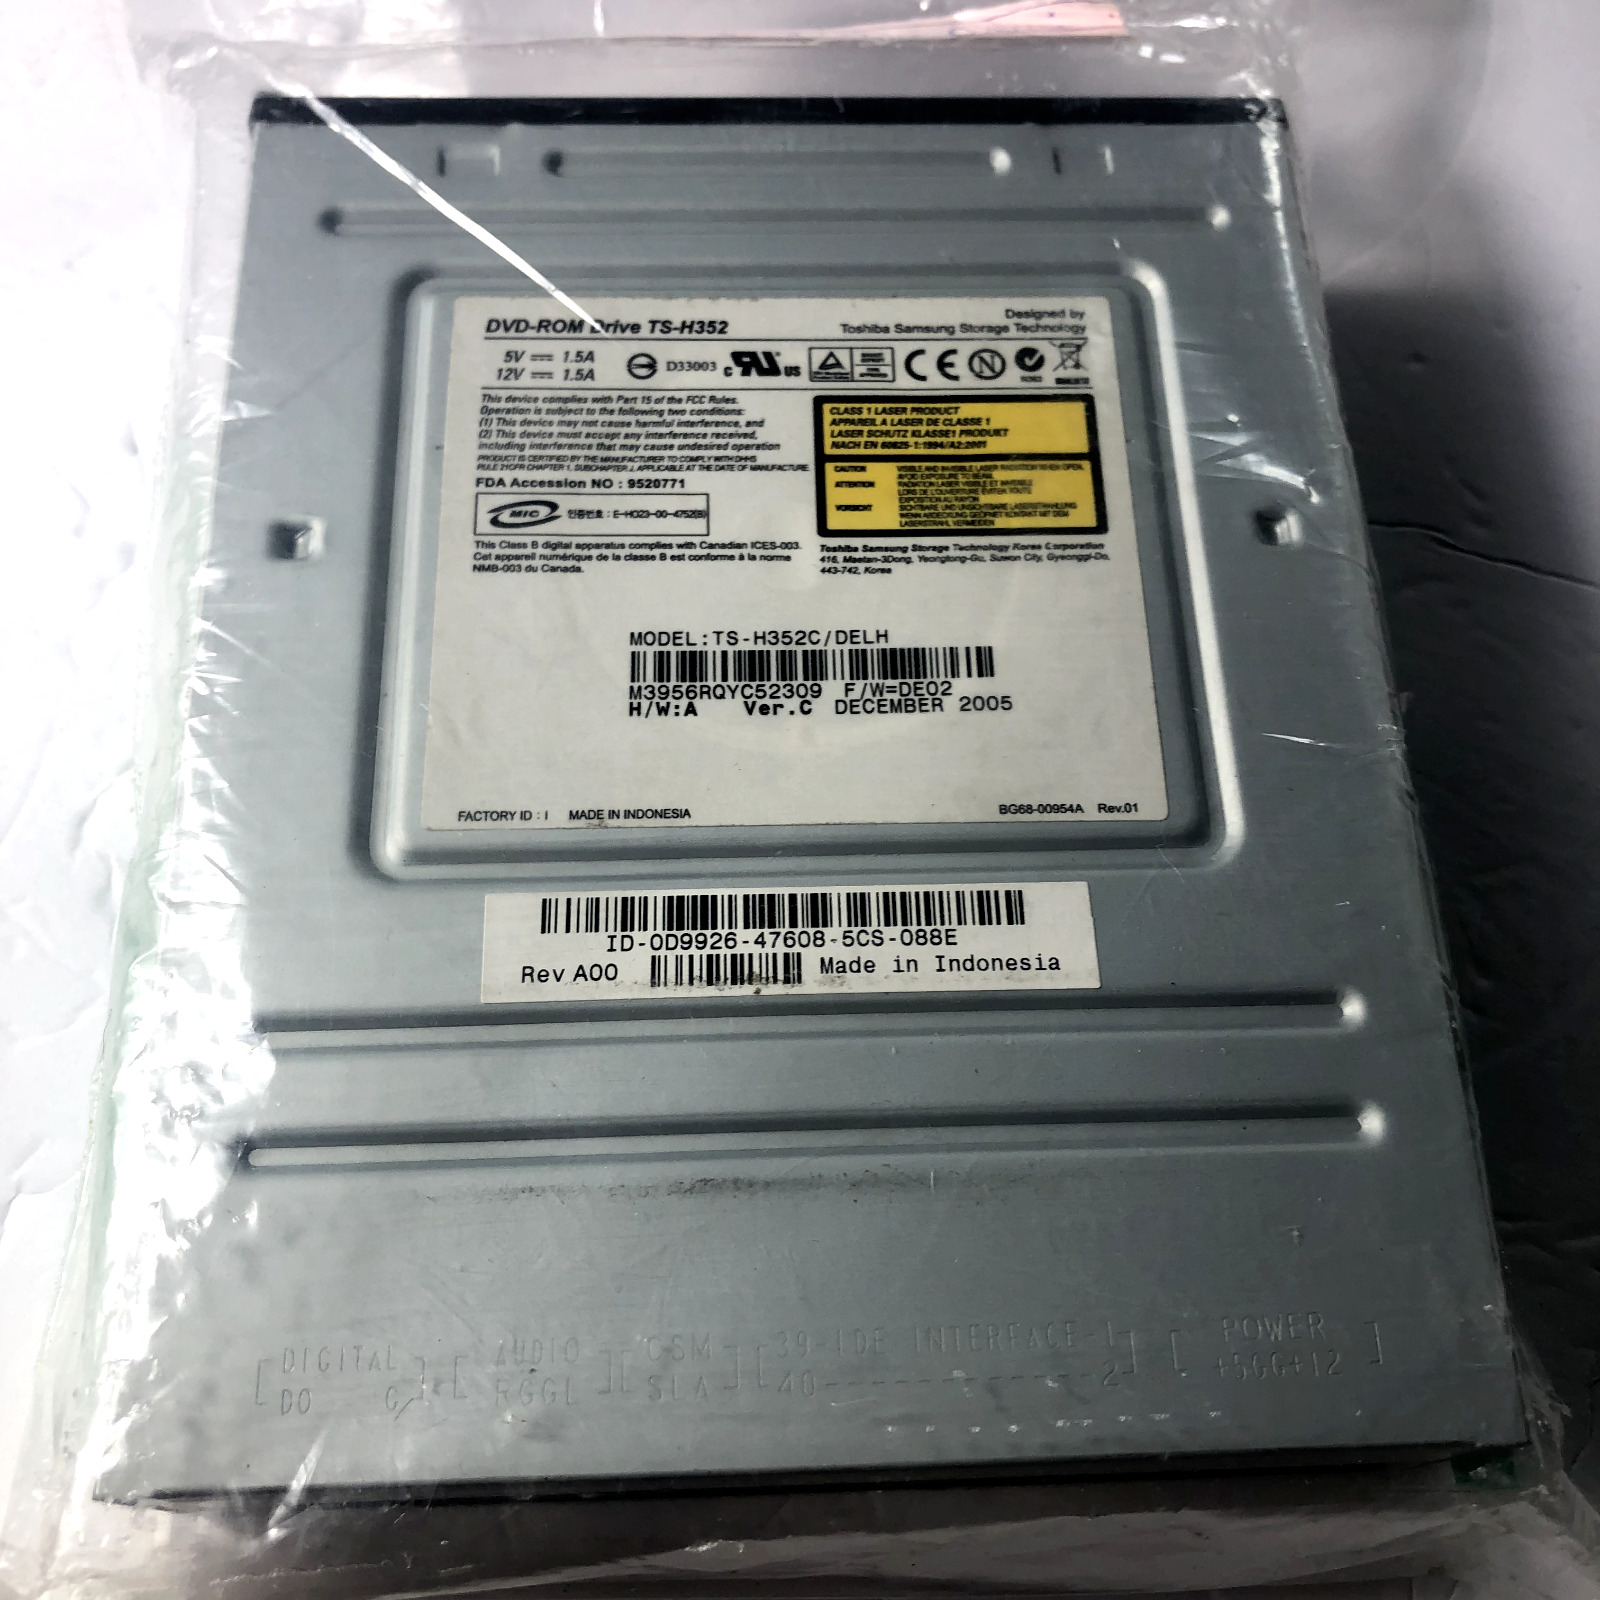 Toshiba Samsung Storage DVD Rom Drive, TS-H352, untested.